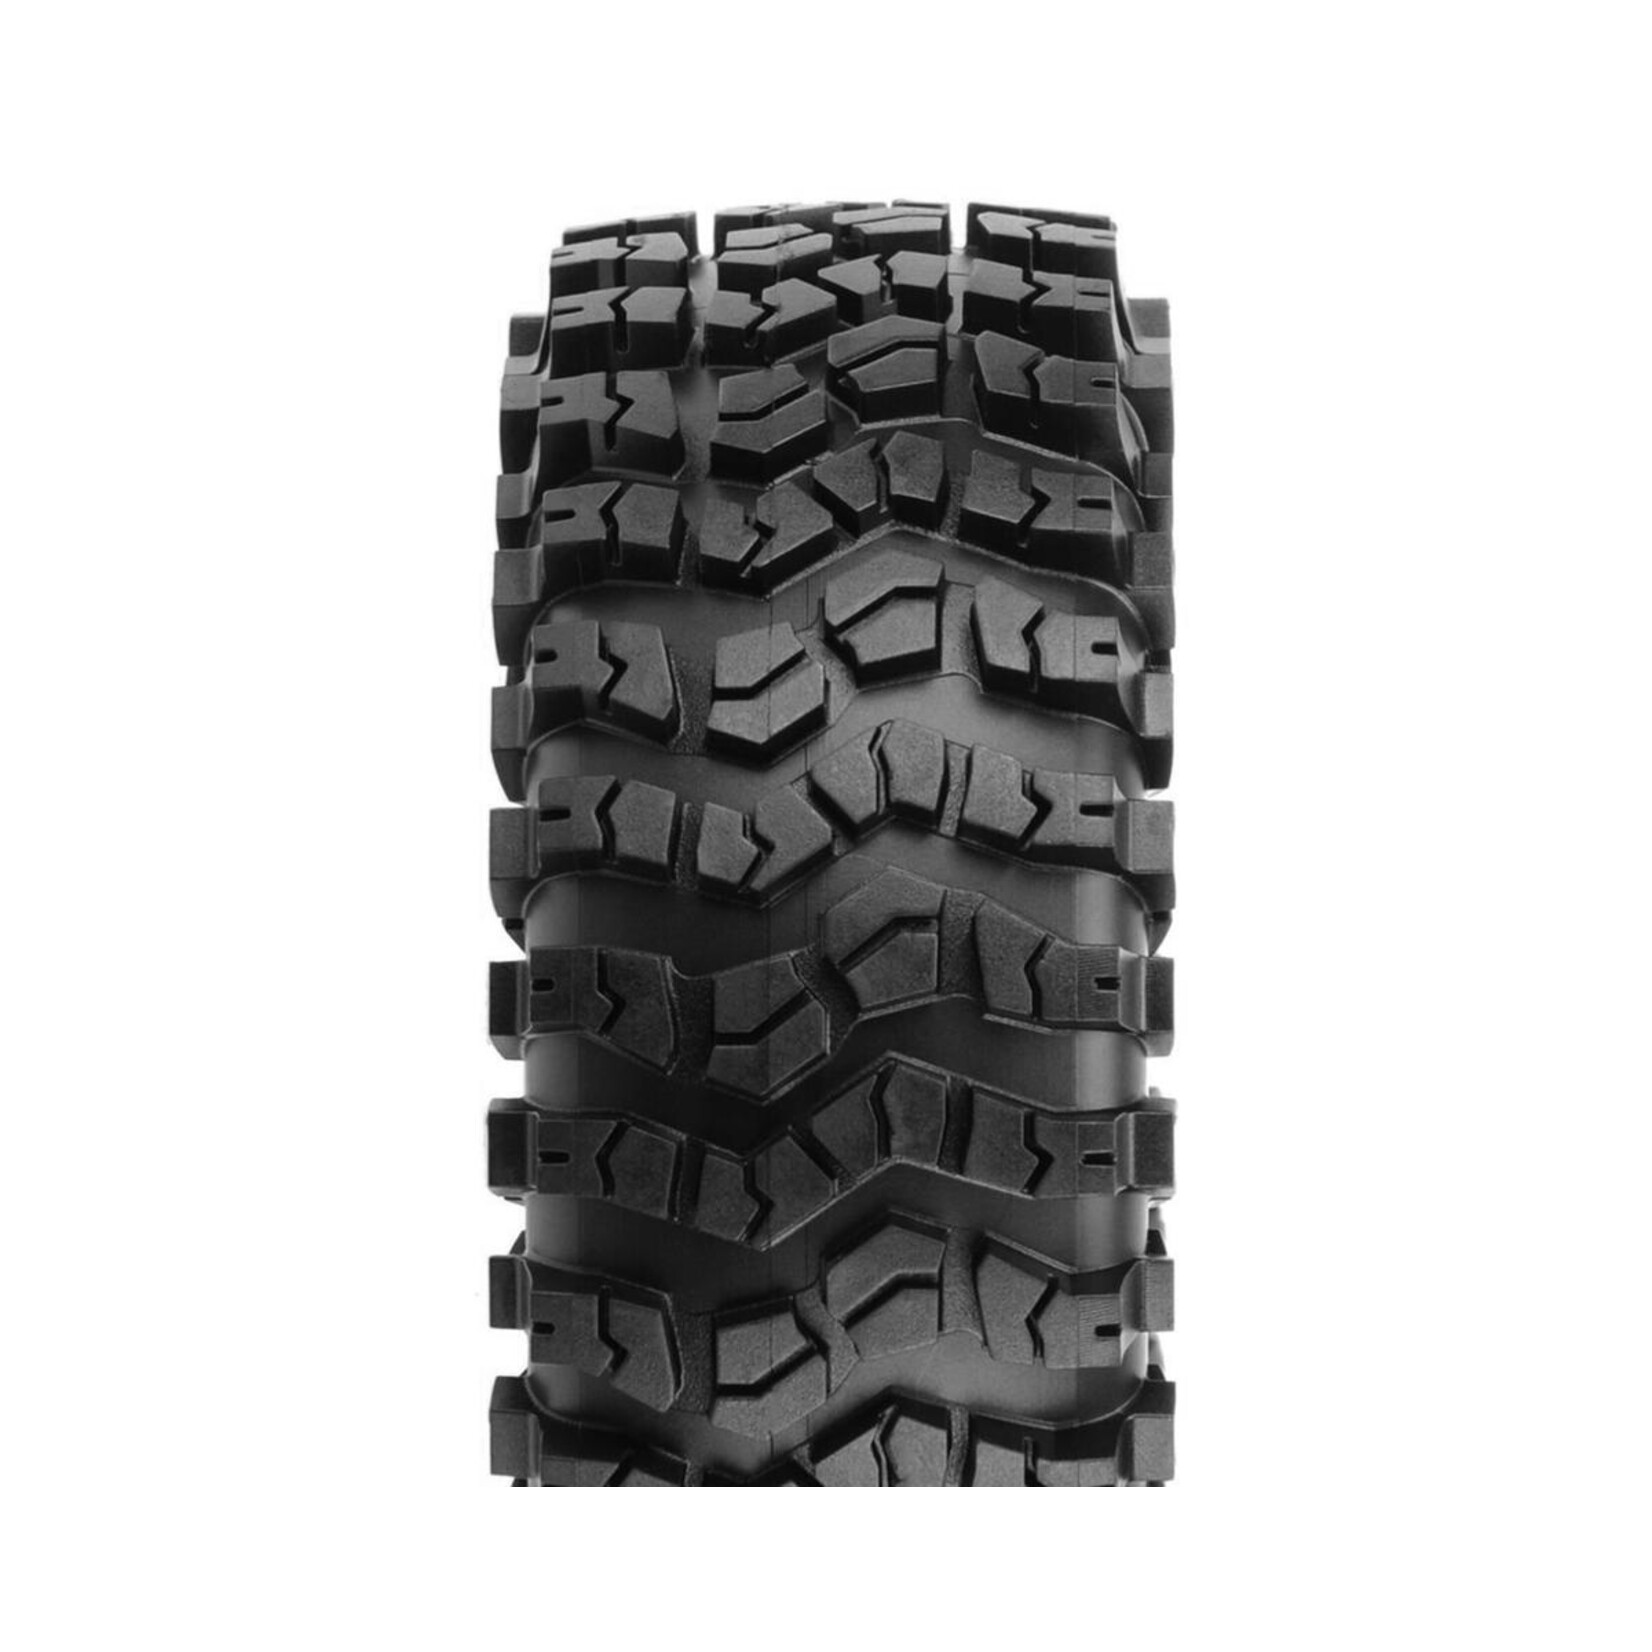 Pro-Line Pro-Line Flat Iron XL 1.9" Rock Crawler Tires w/Memory Foam (2) (G8) #10112-00